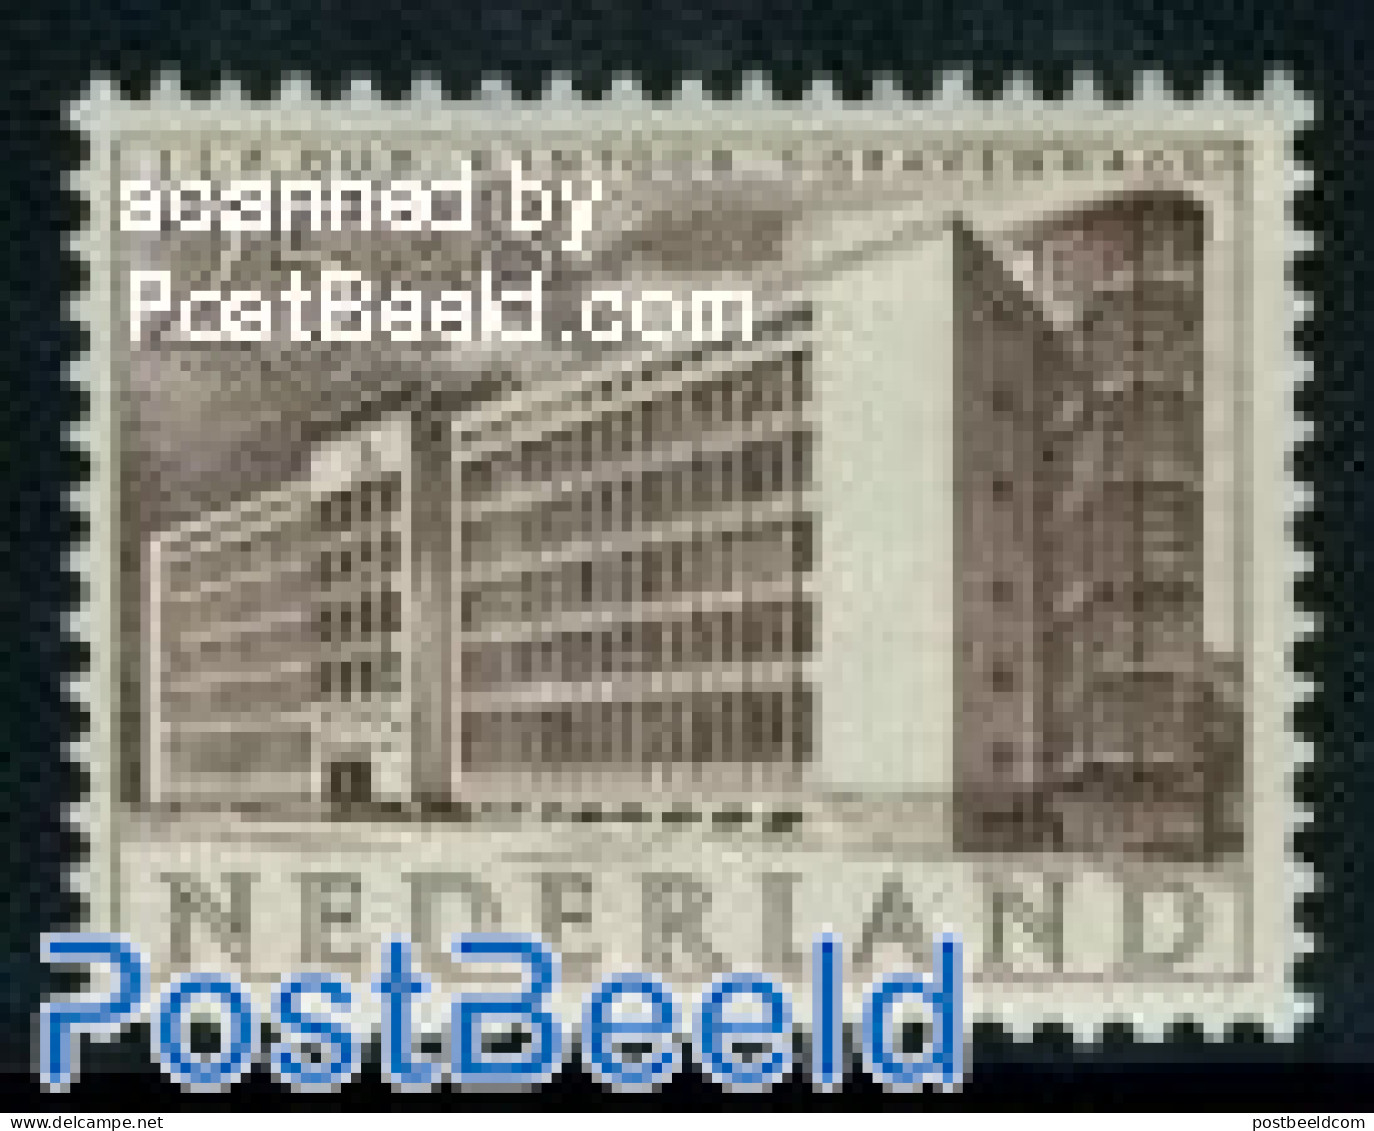 Netherlands 1955 25+8c, Den Haag, Stamp Out Of Set, Mint NH, Art - Modern Architecture - Nuevos